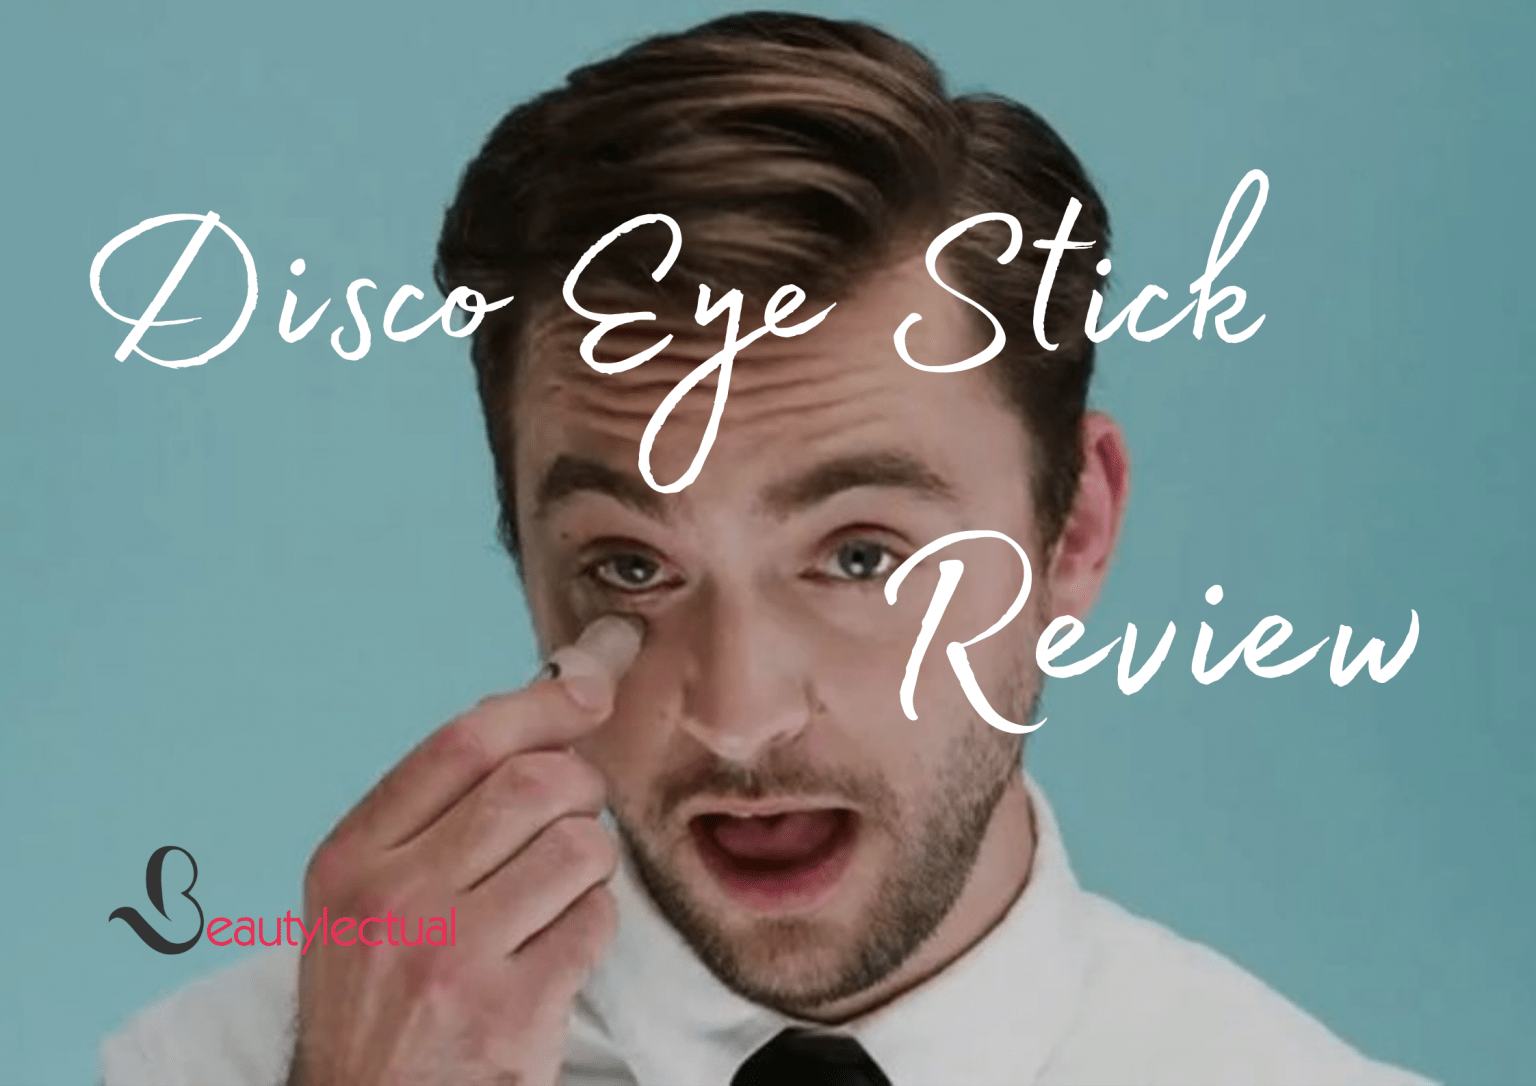 disco caffeinated eye stick